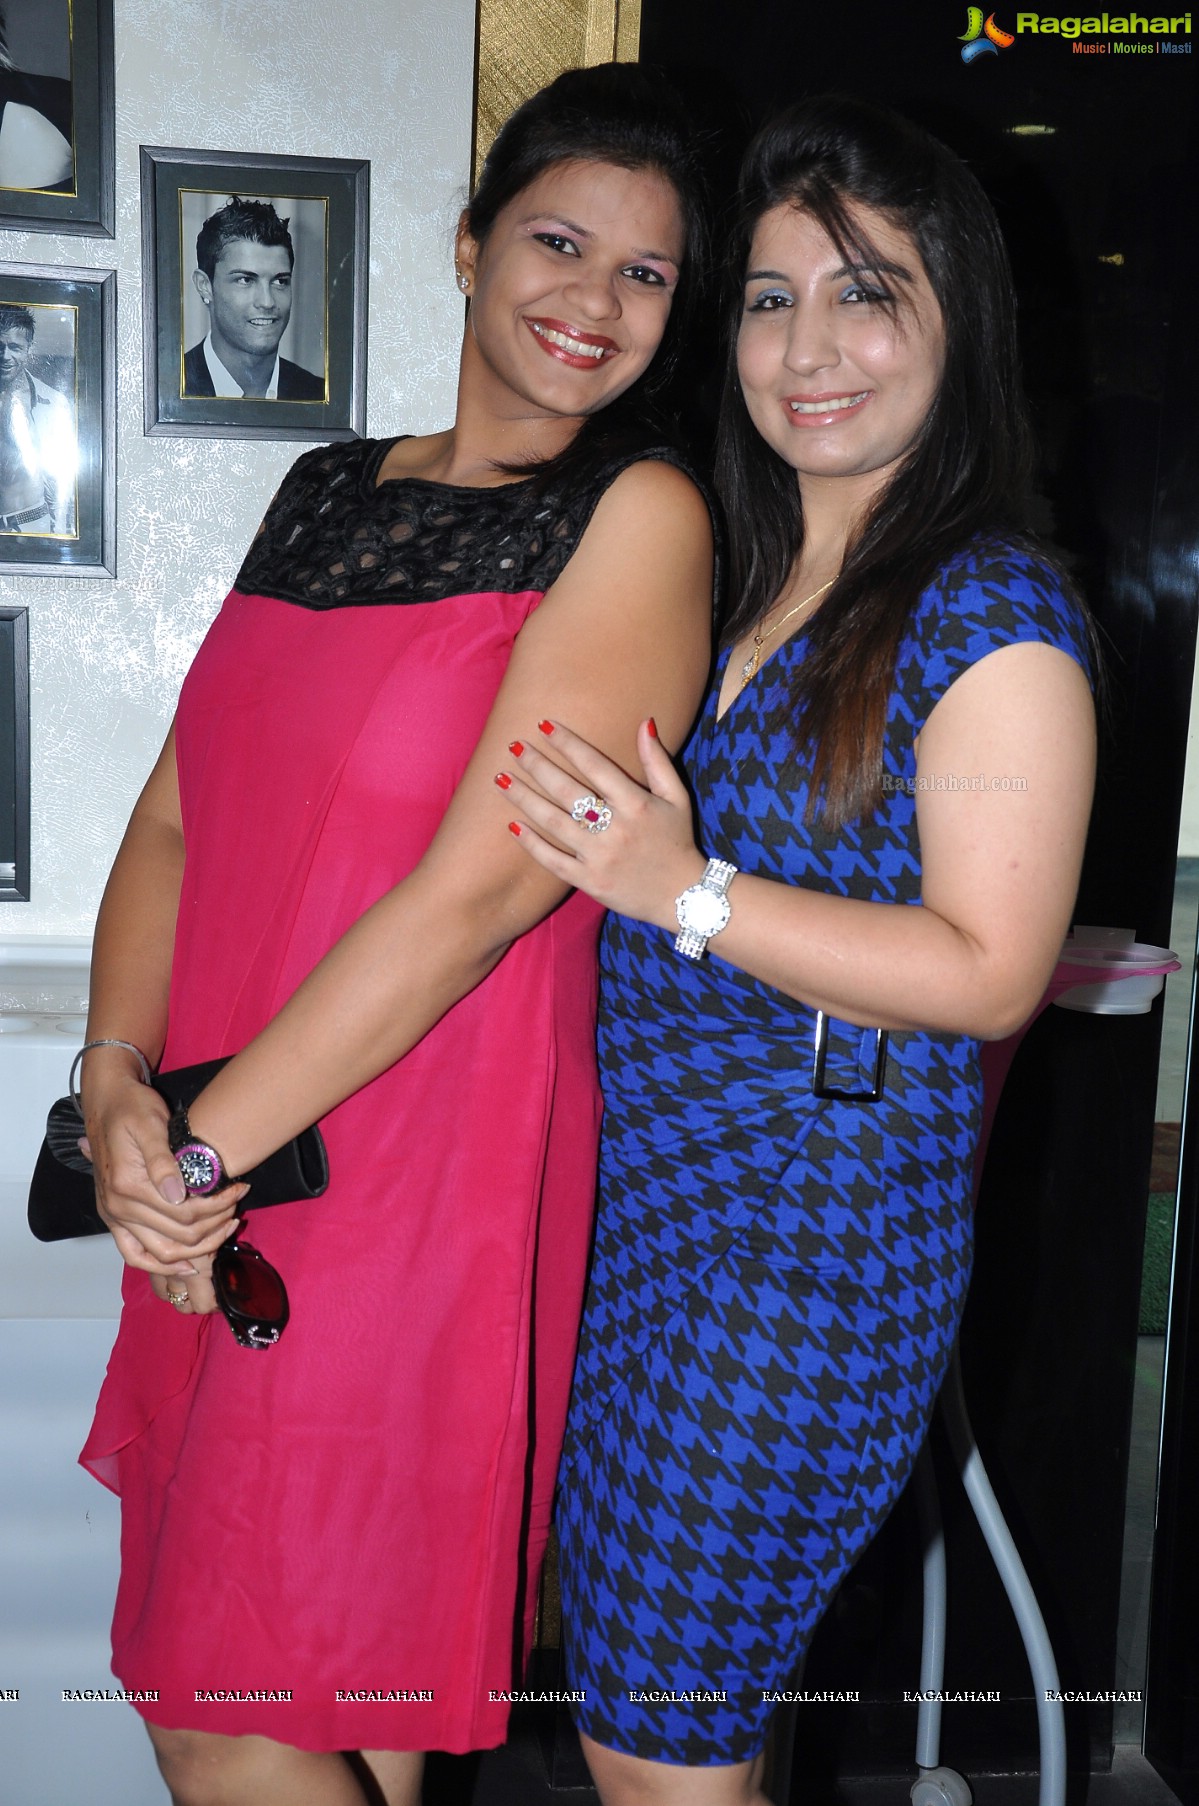 Gorgeous Girls Club Event at Ashton Pierra, Hyderabad